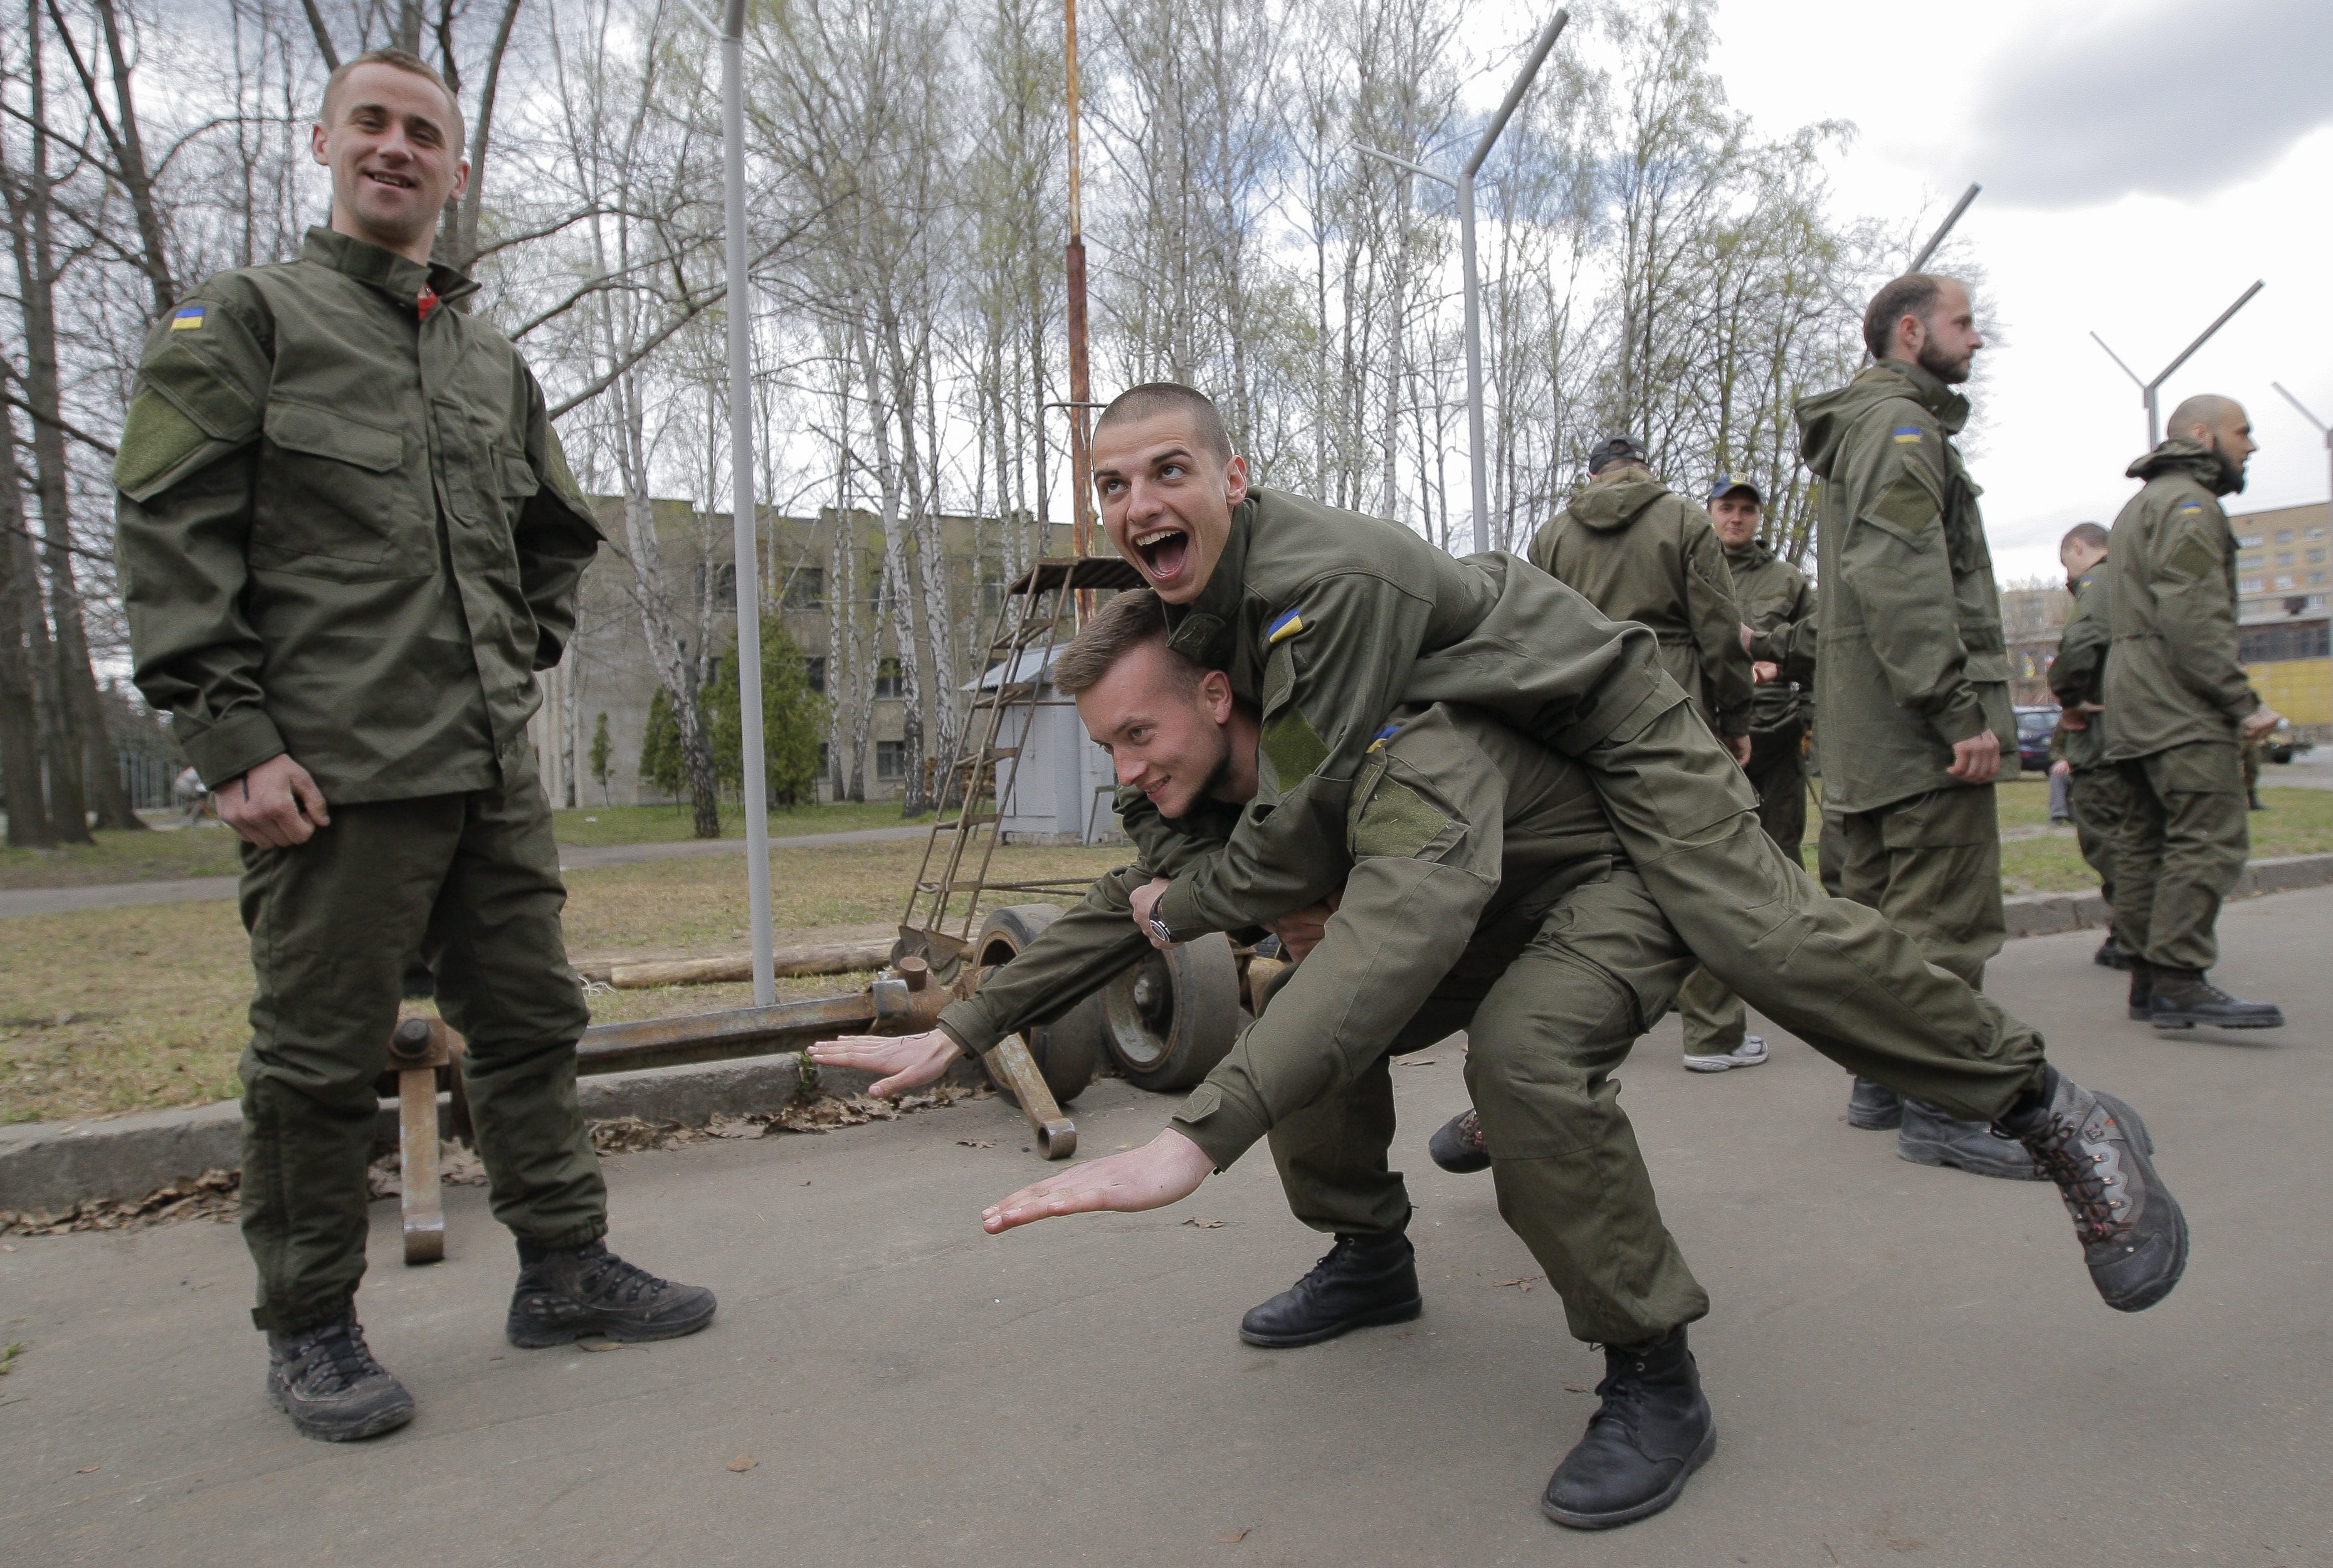 After finishing their training course, new recruits to the Ukrainian National Guard Azov Regiment goof around. (Photo: Dmitry Lipavskiy/EPA/Newscom)